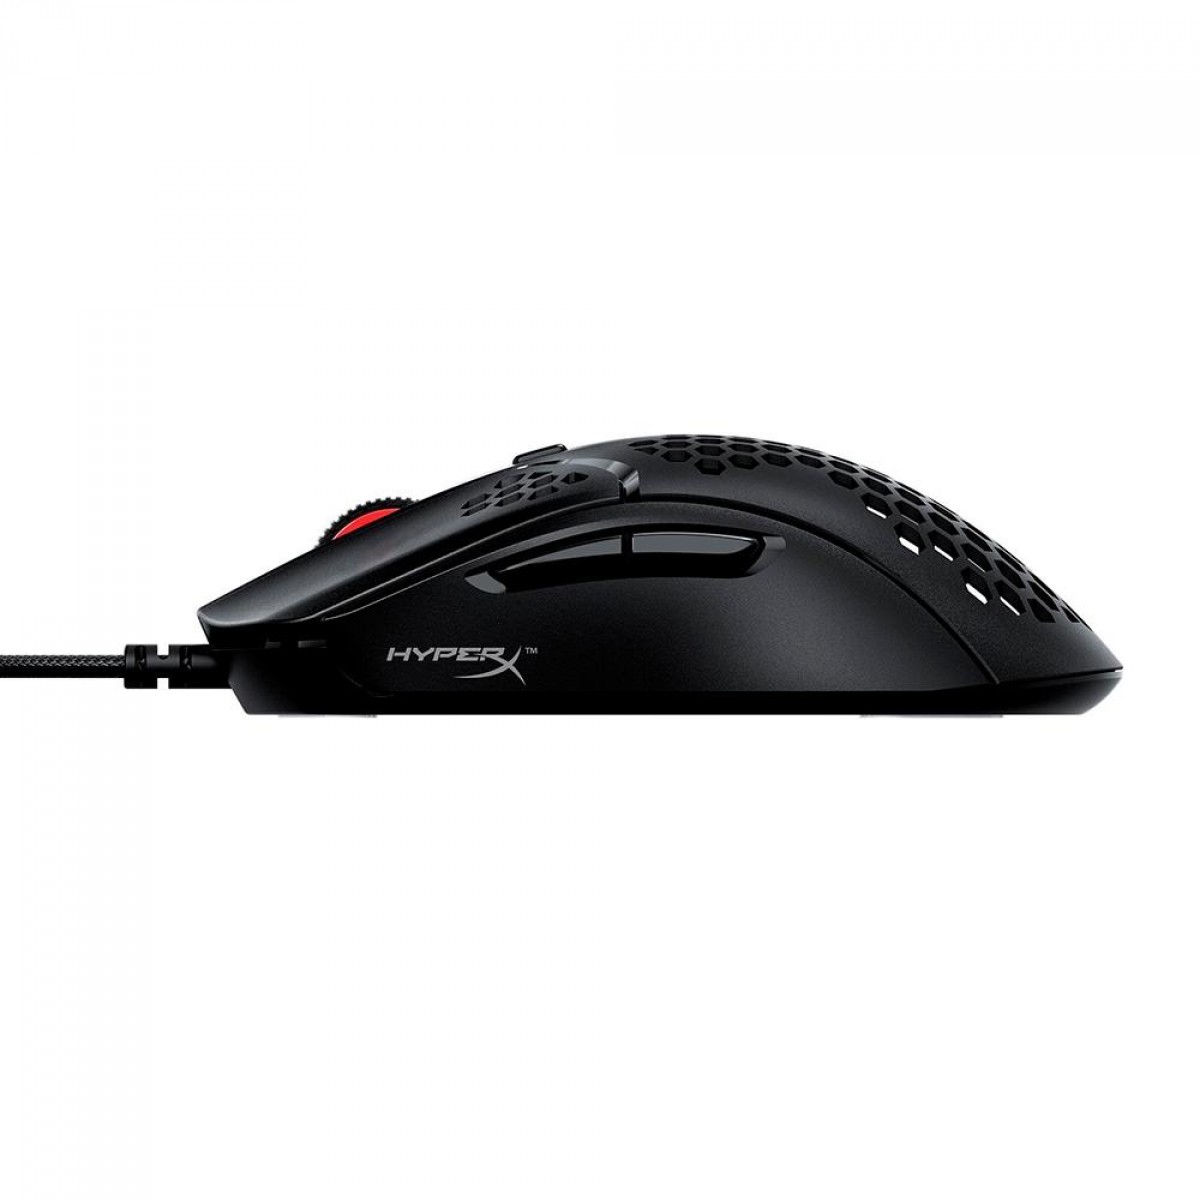 Mouse Gamer HyperX Pulsefire Haste RGB, 16000 DPI, 6 Botões, USB, Black, HMSH1-A-BK/G